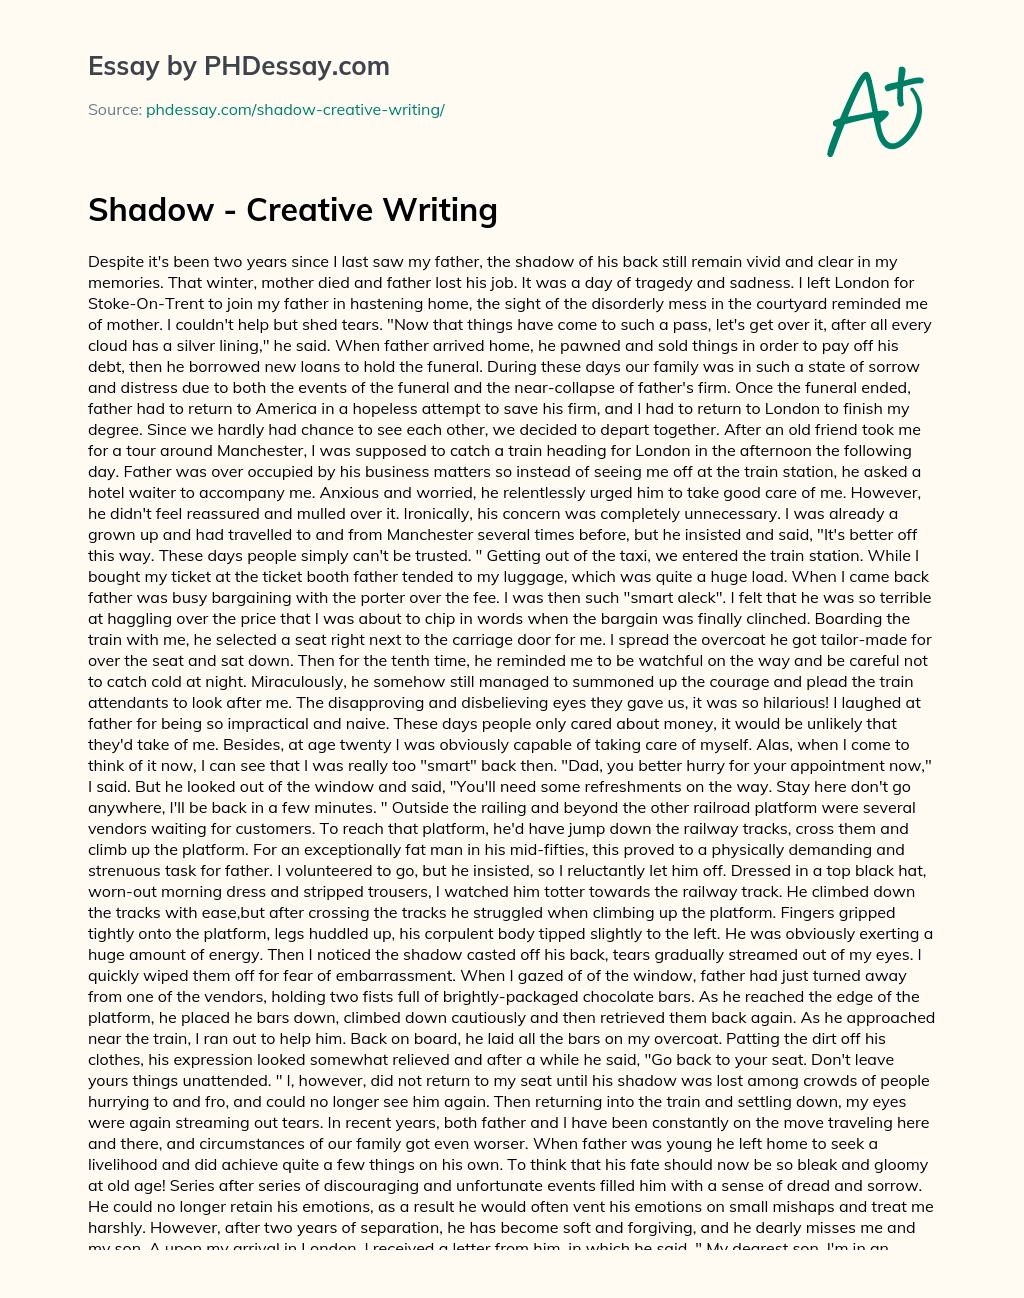 Shadow – Creative Writing essay